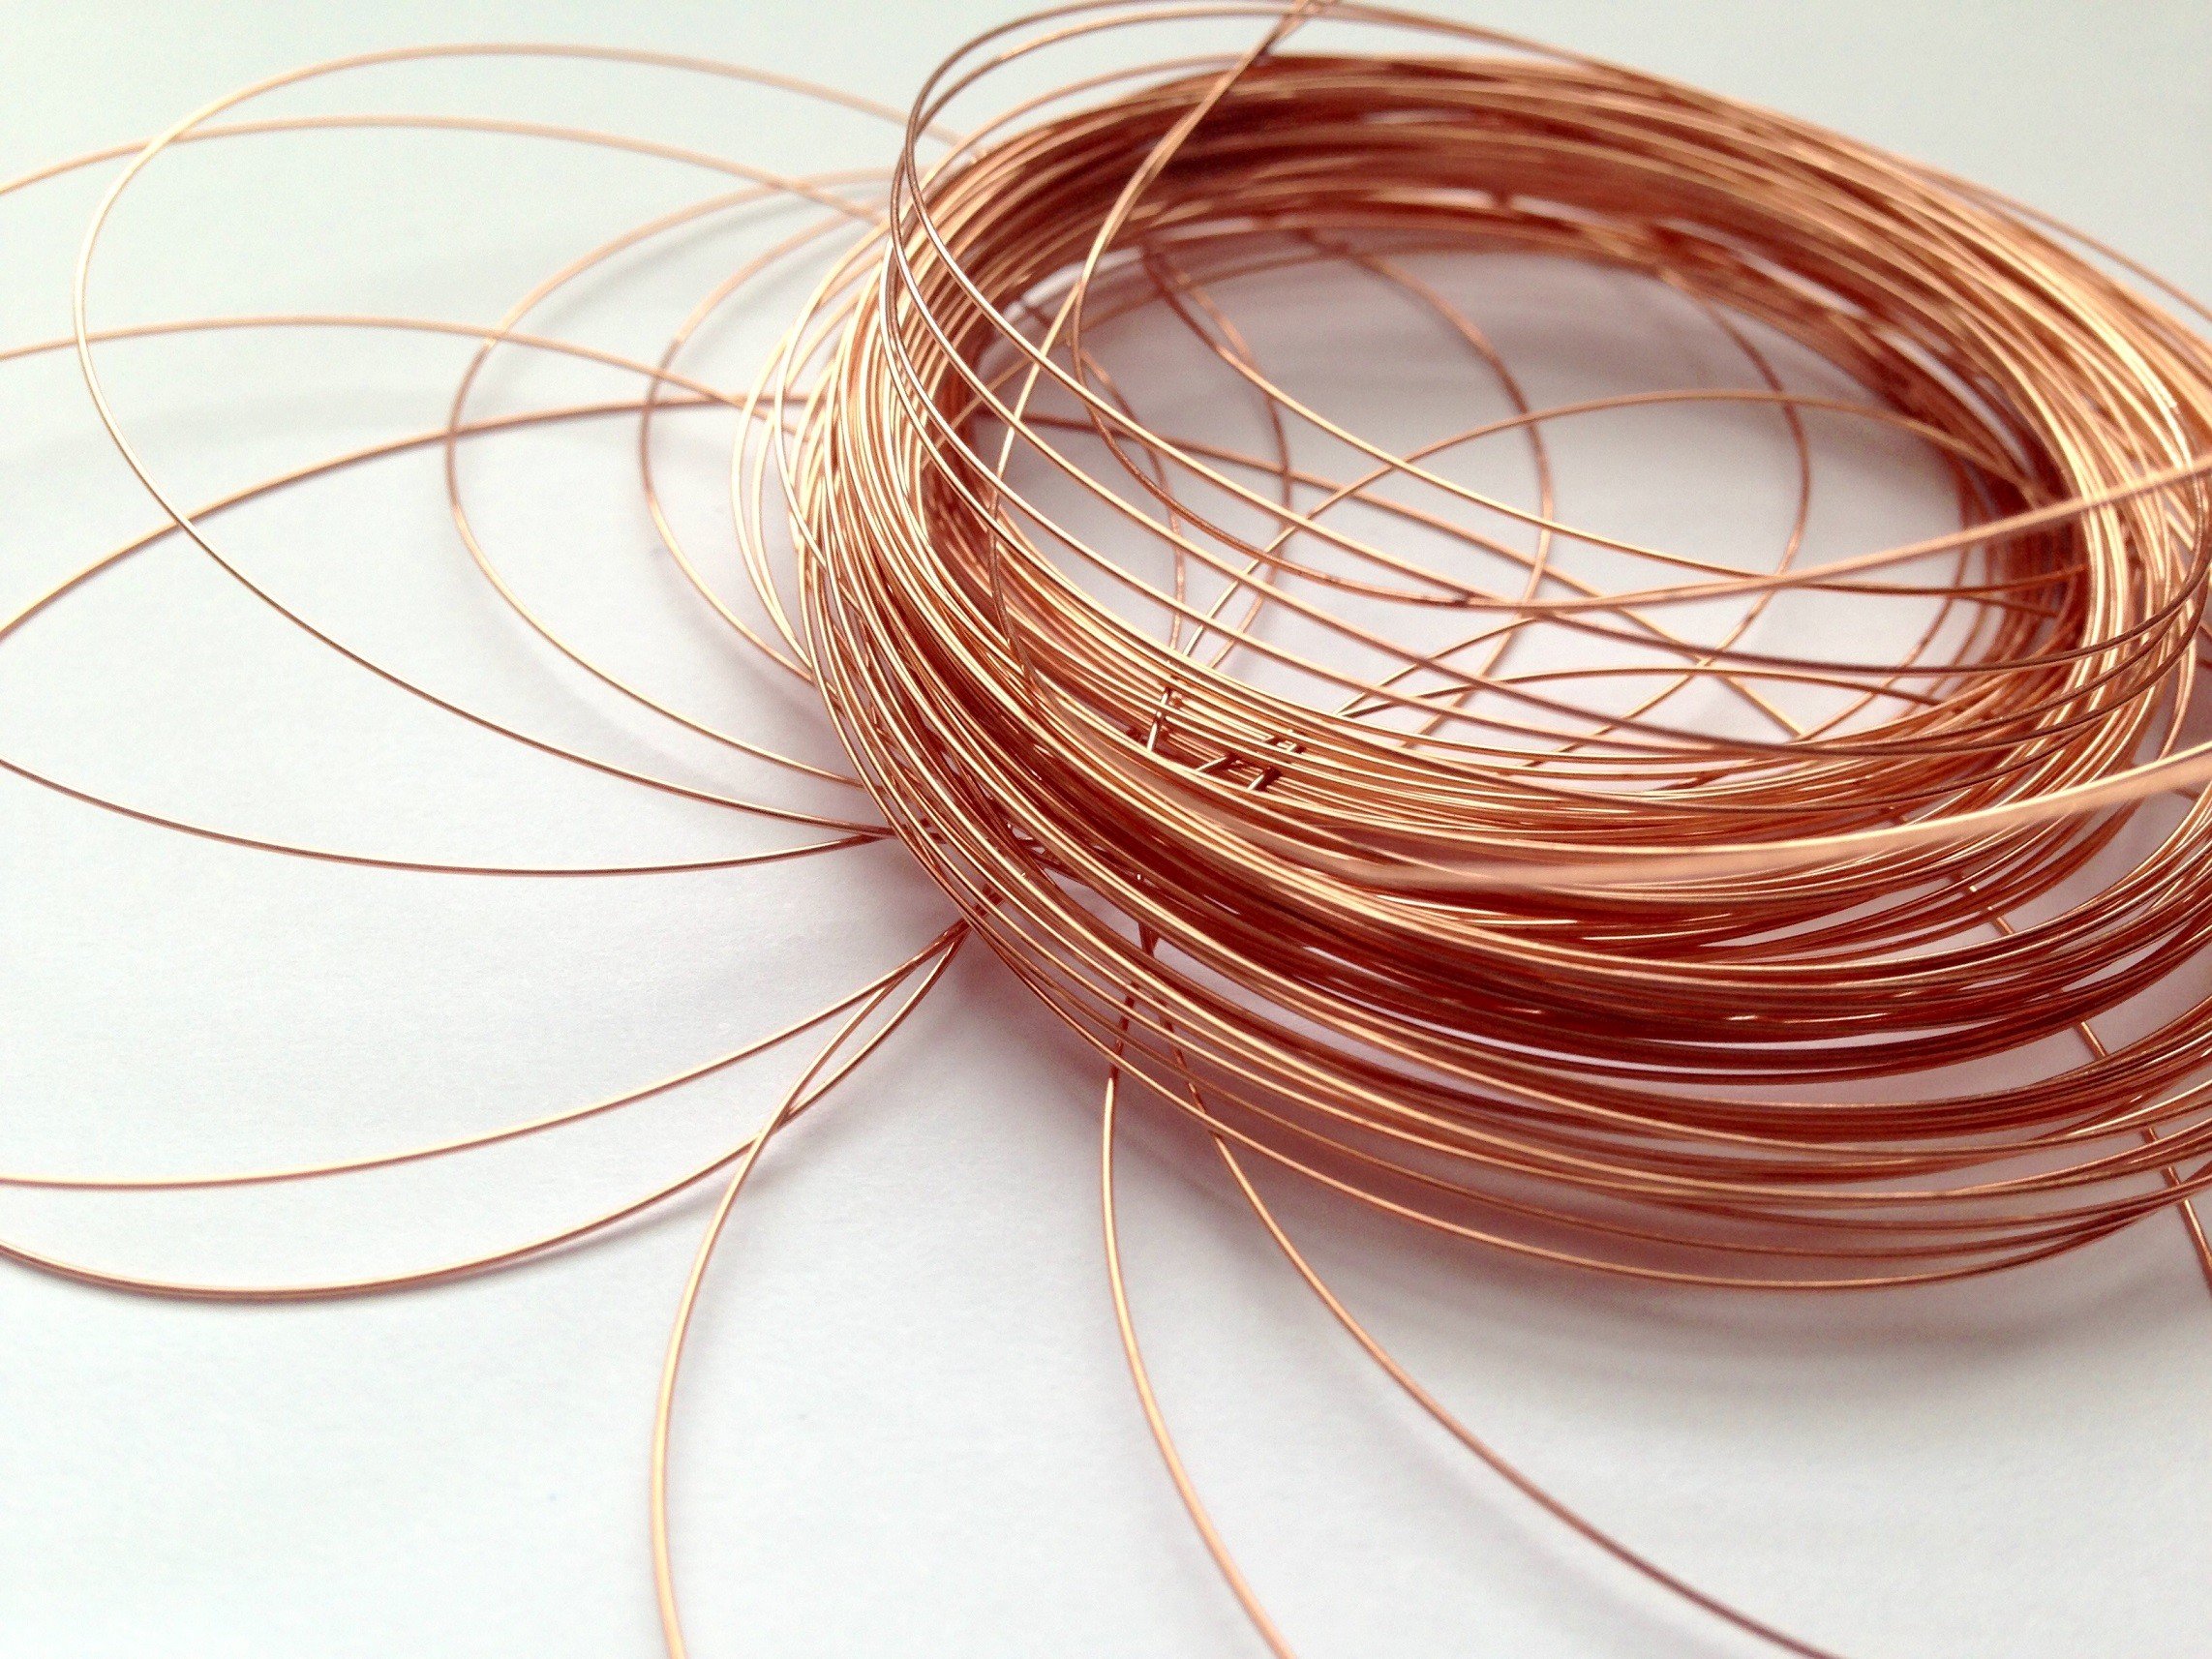 Copper wire coil on white background